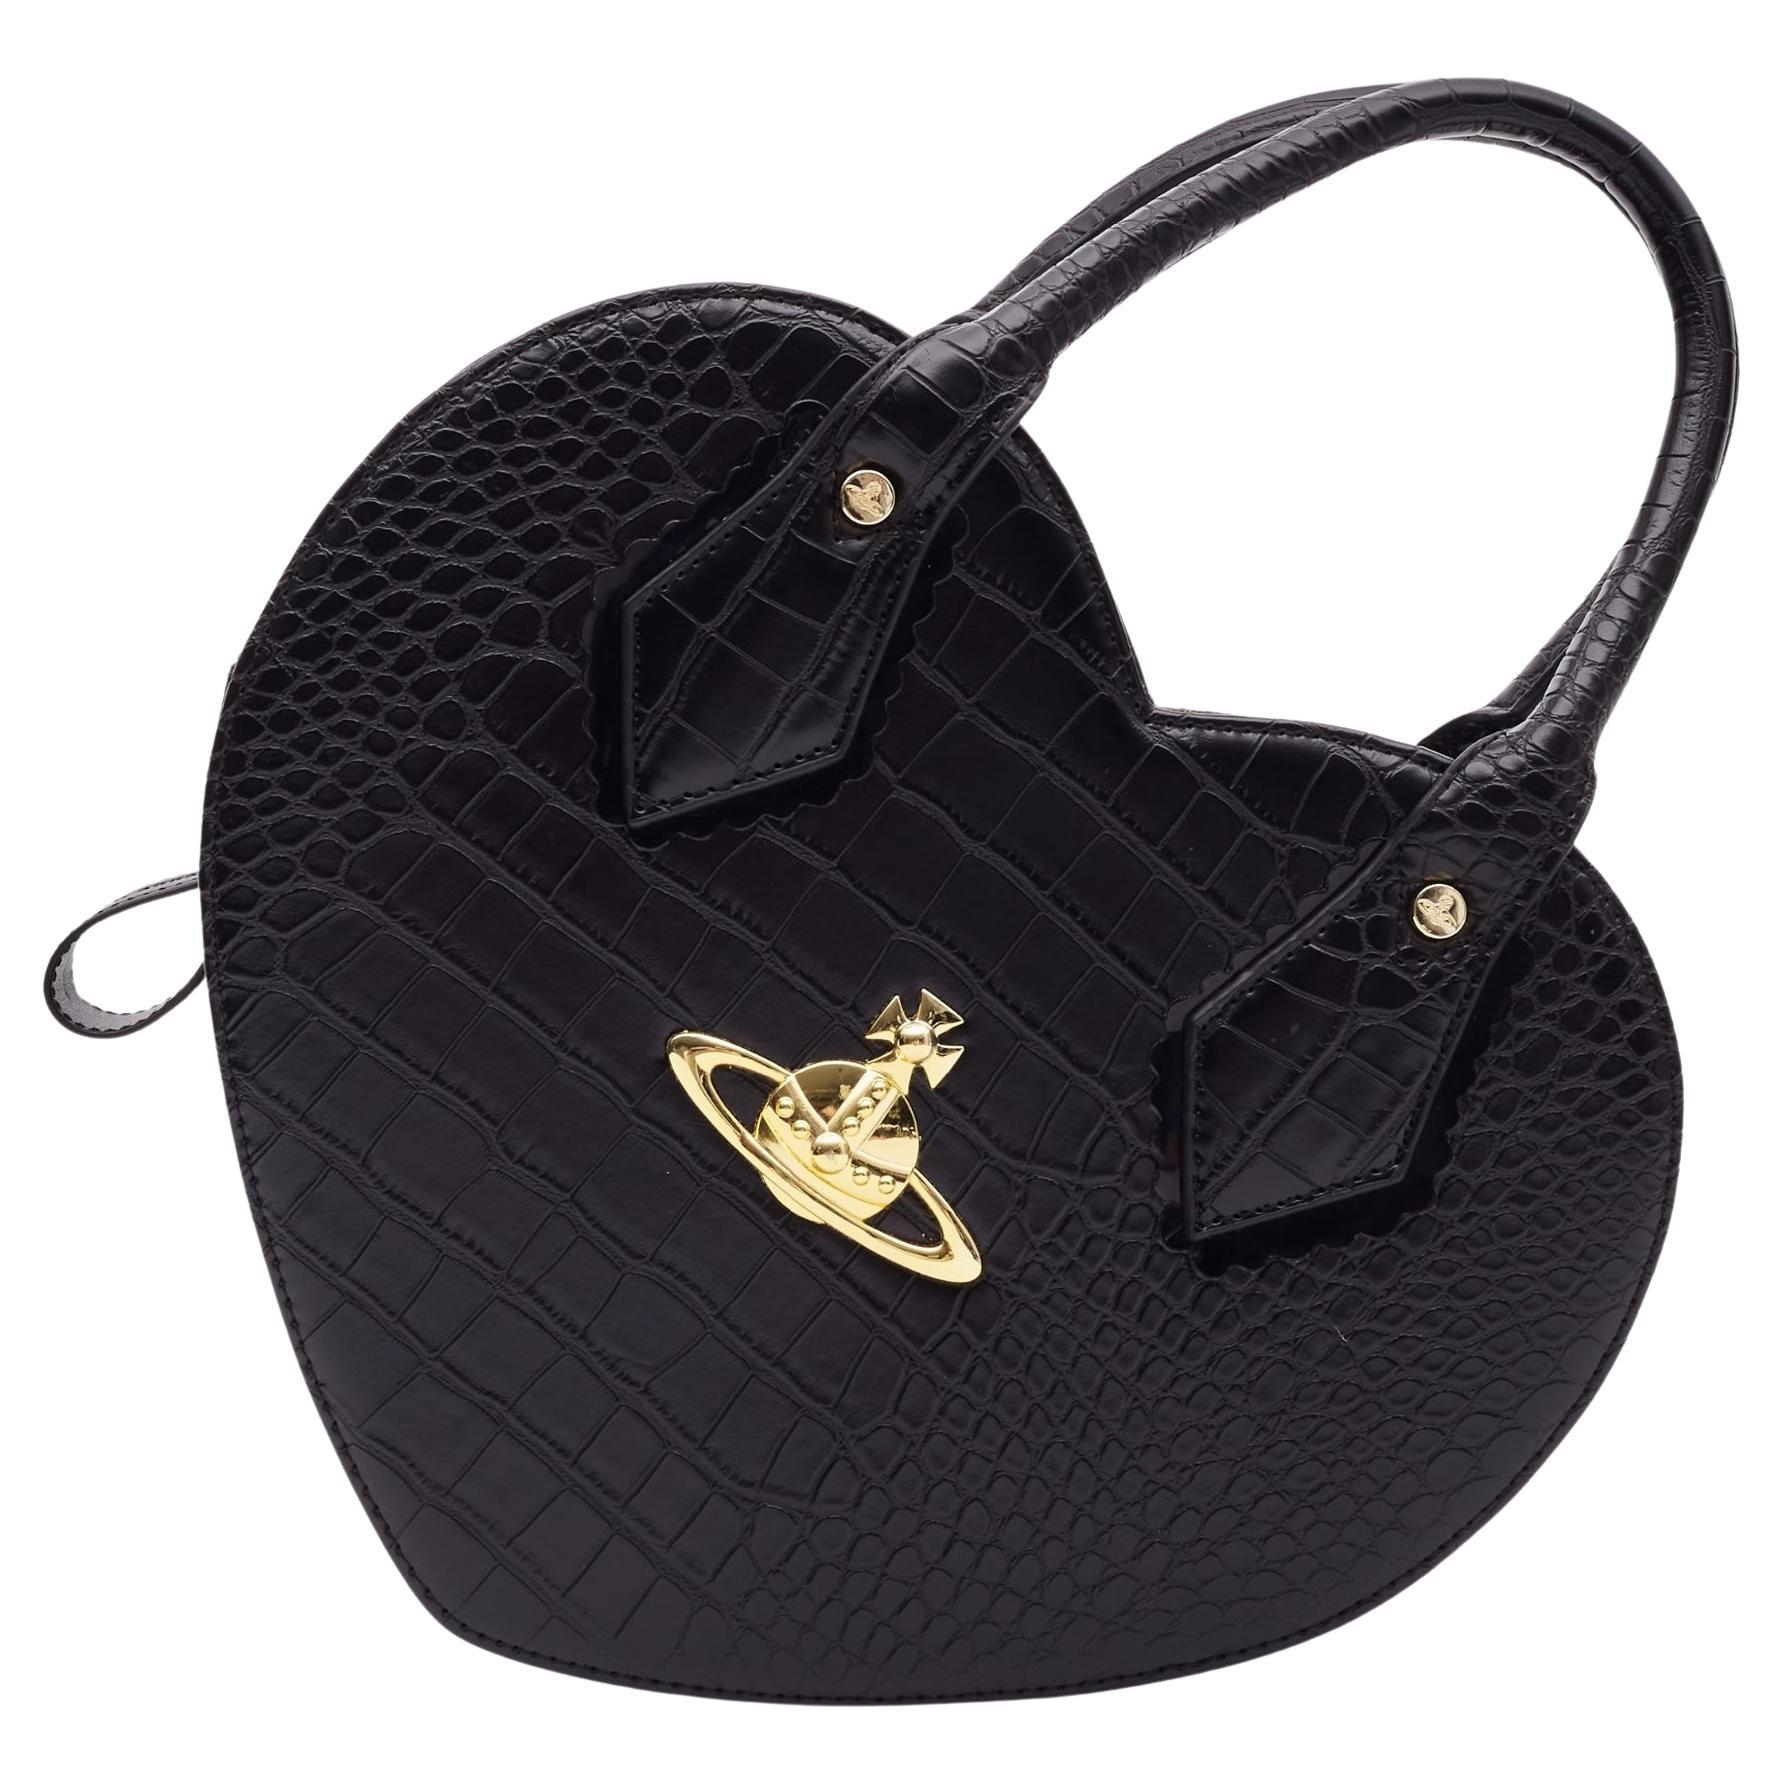 Vivienne Westwood Black Croc Embossed Chancery Heart Handbag For Sale